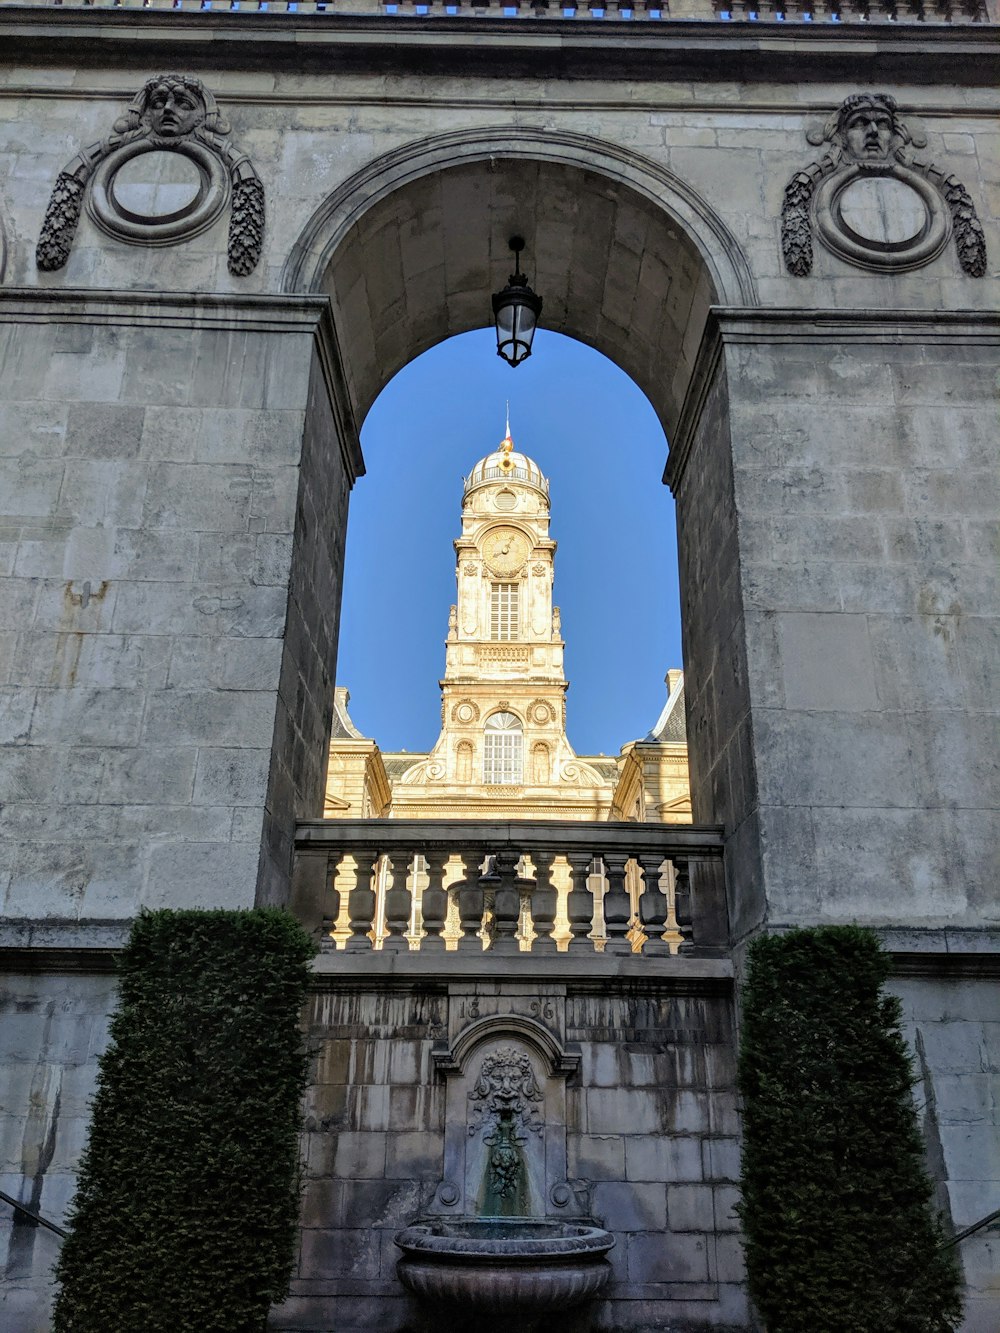 a clock tower seen through an arch in a stone building